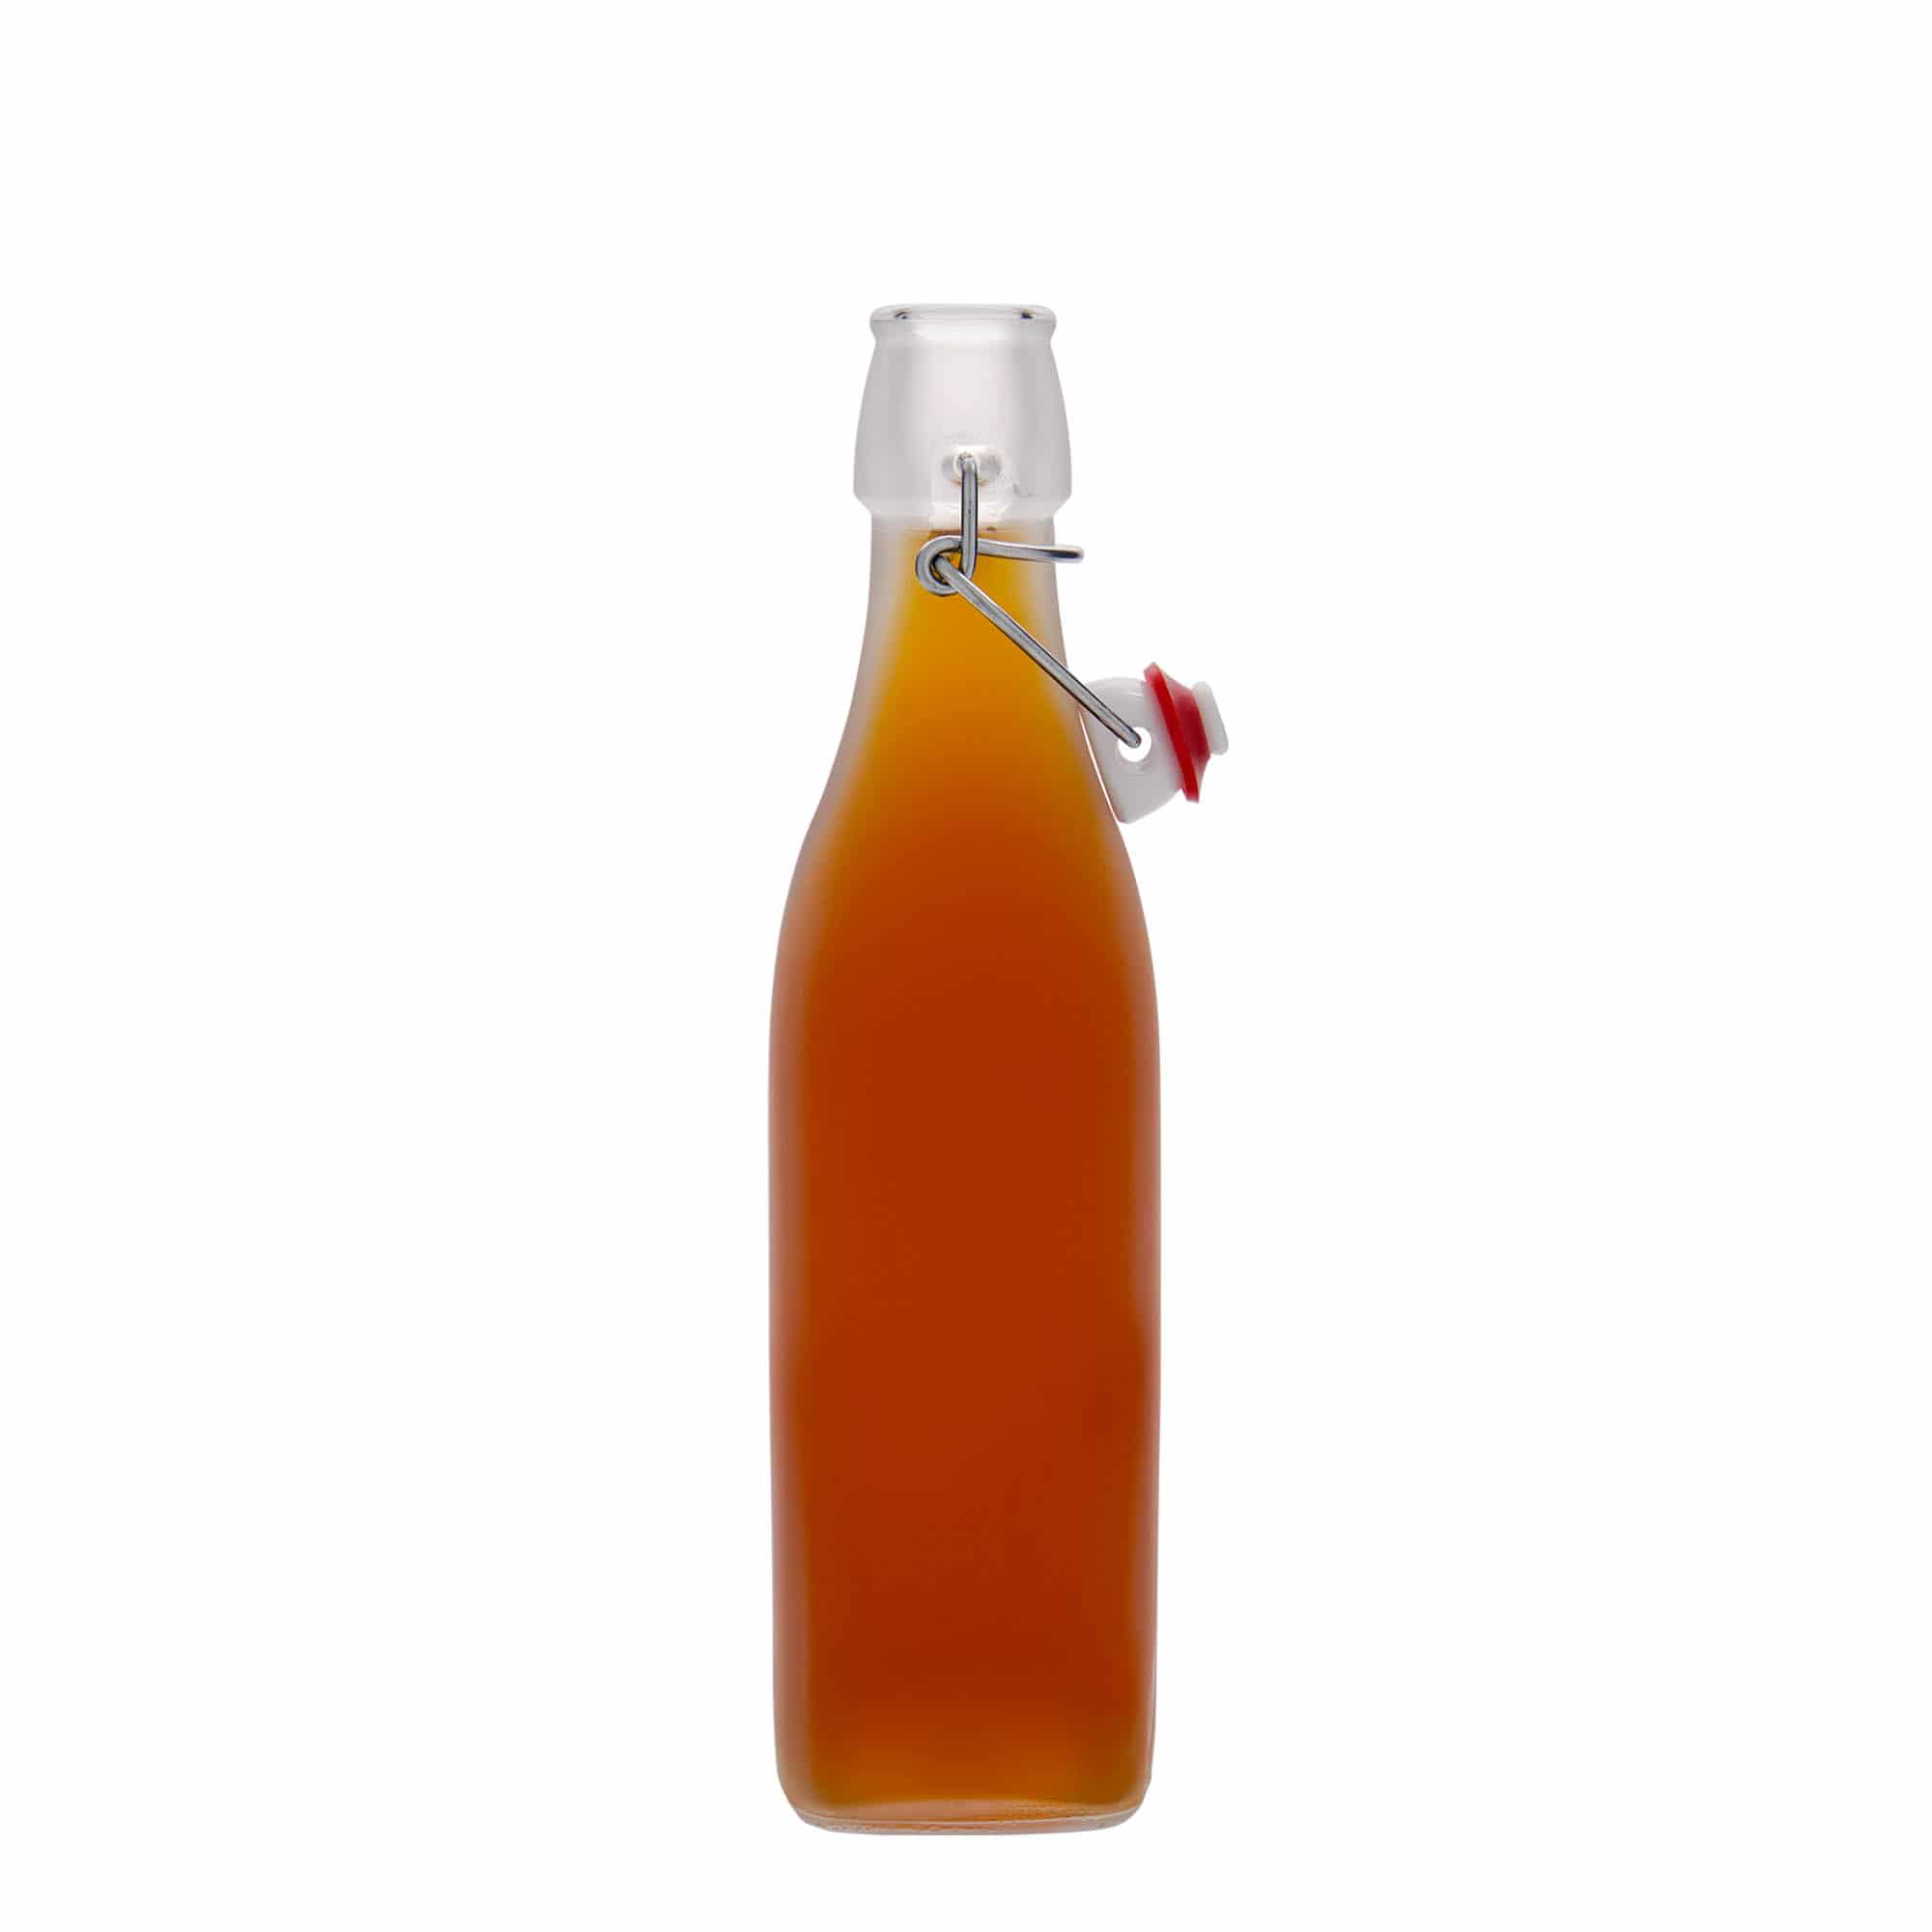 500 ml glass bottle 'Swing', square, white, closure: swing top